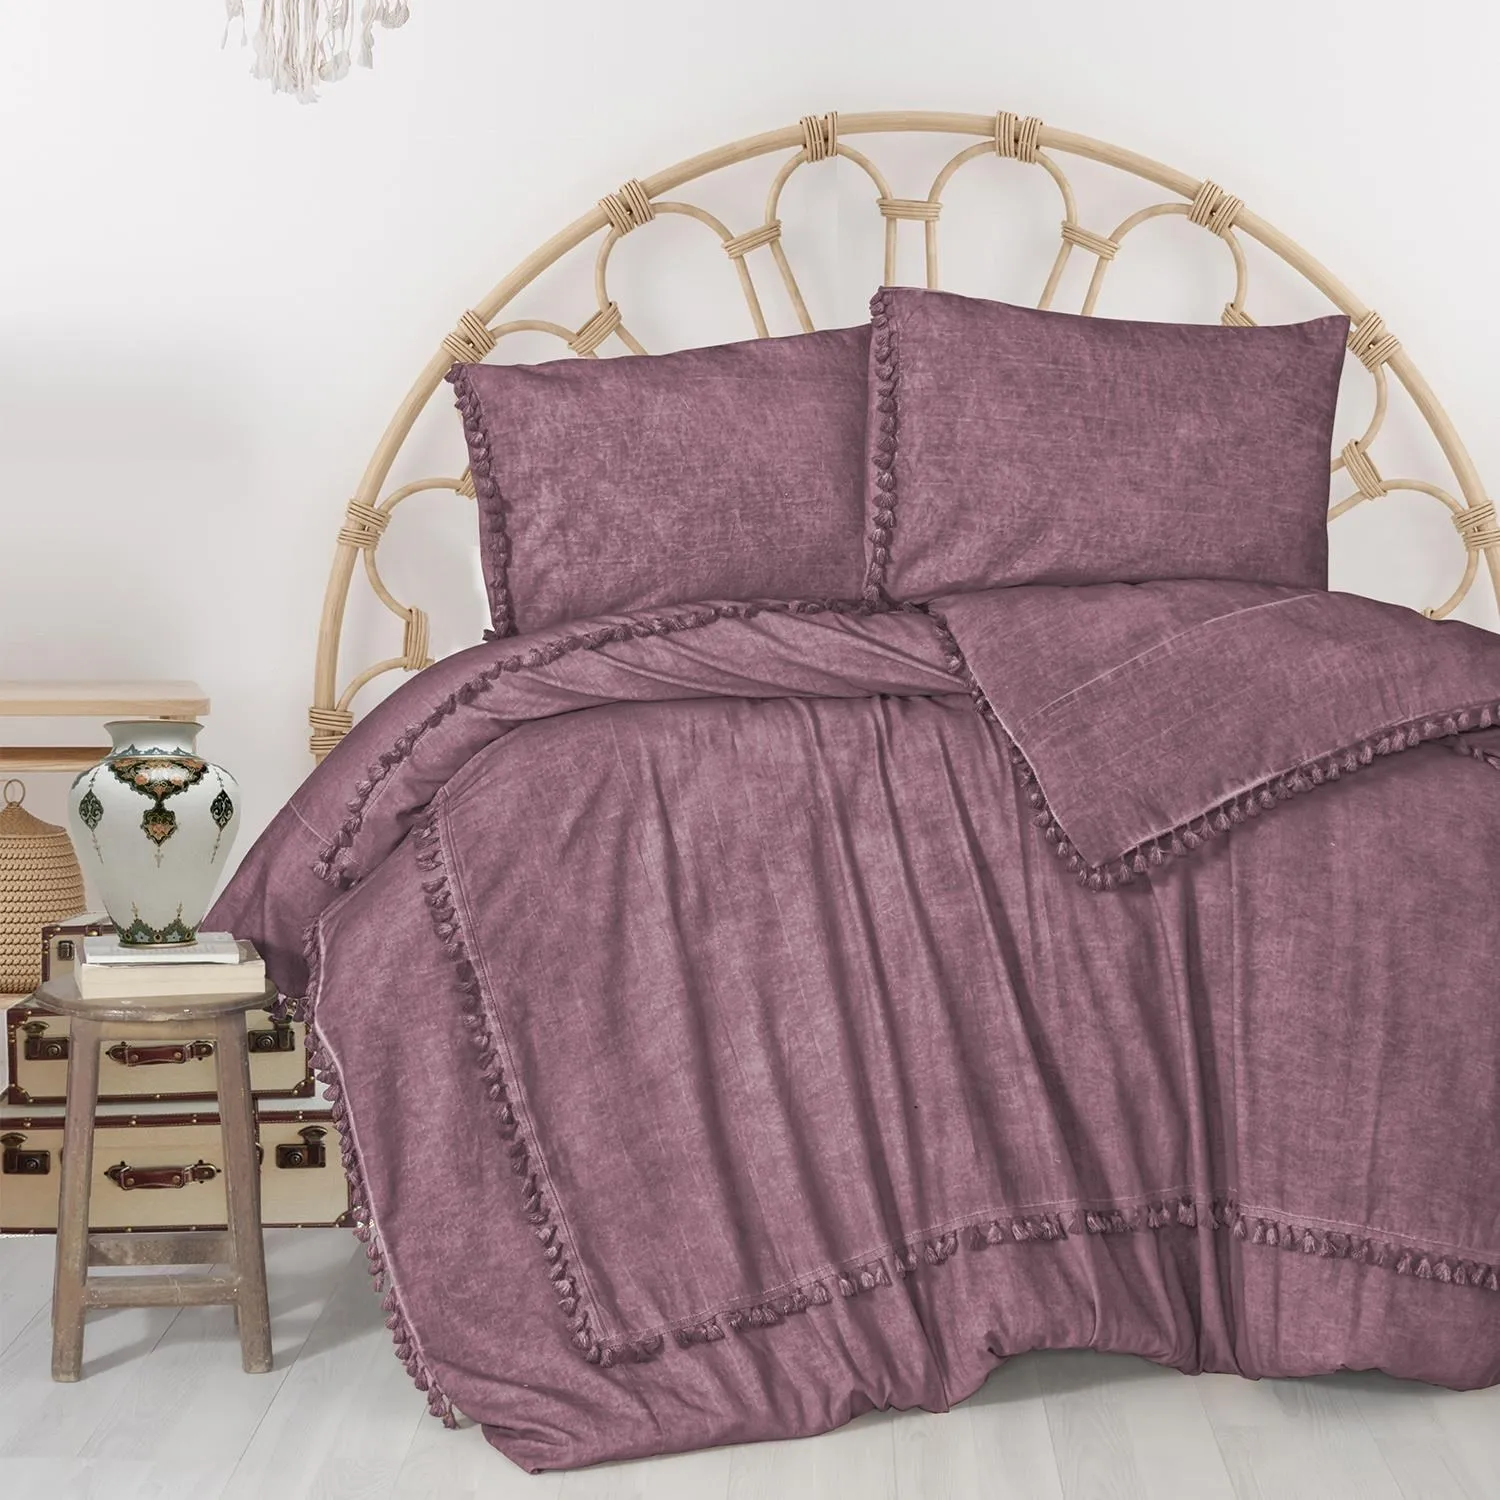 

Vivamaison Cotton Colorful Bedding Set: Duvet cover Lacy + 2 pillowcases in red colors, King, Twin, Double, cotton soft linen